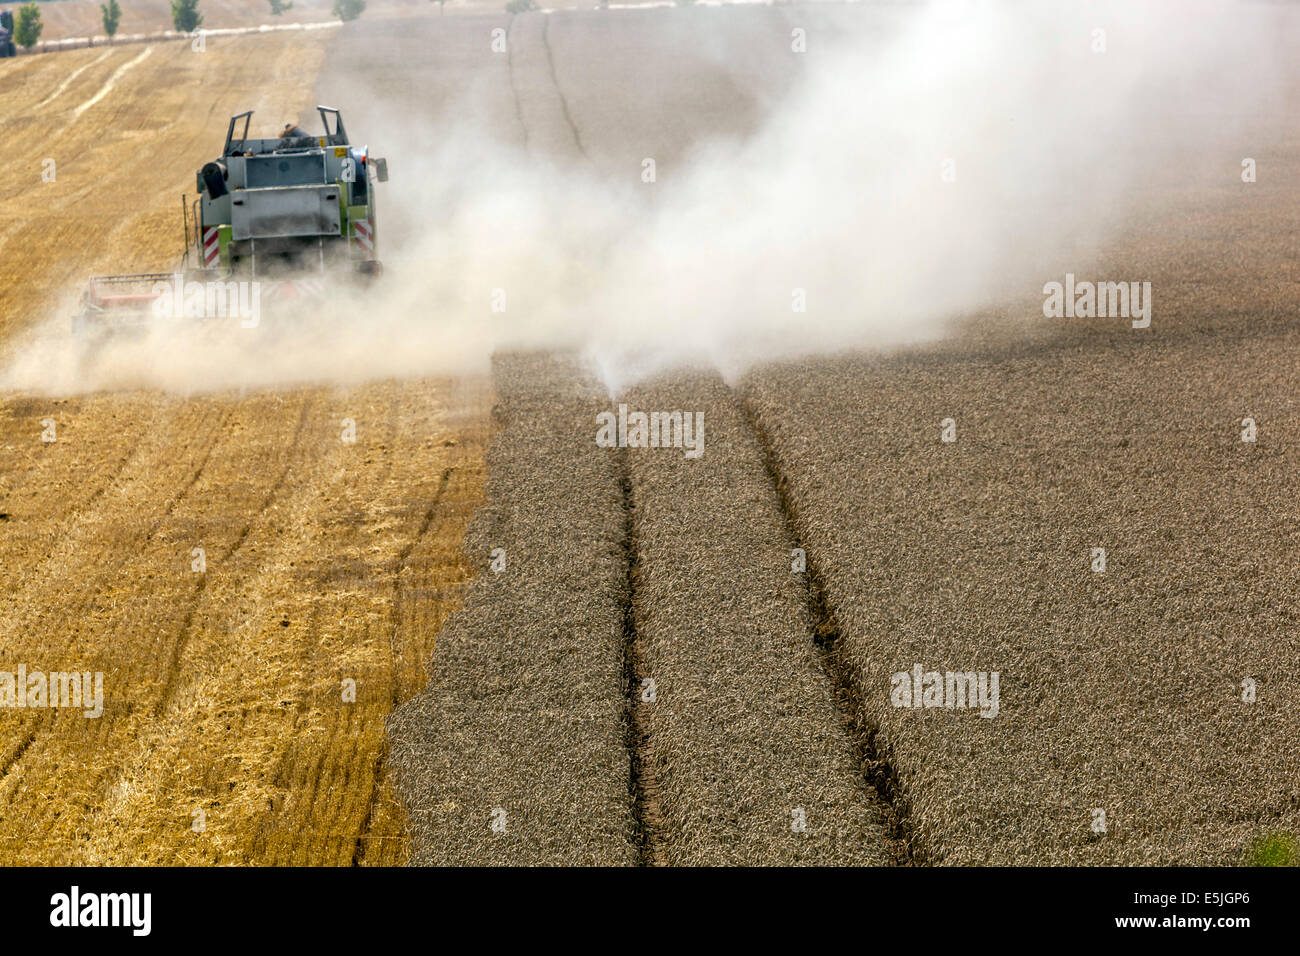 Combine harvesting wheat on a field, Czech Republic Stock Photo